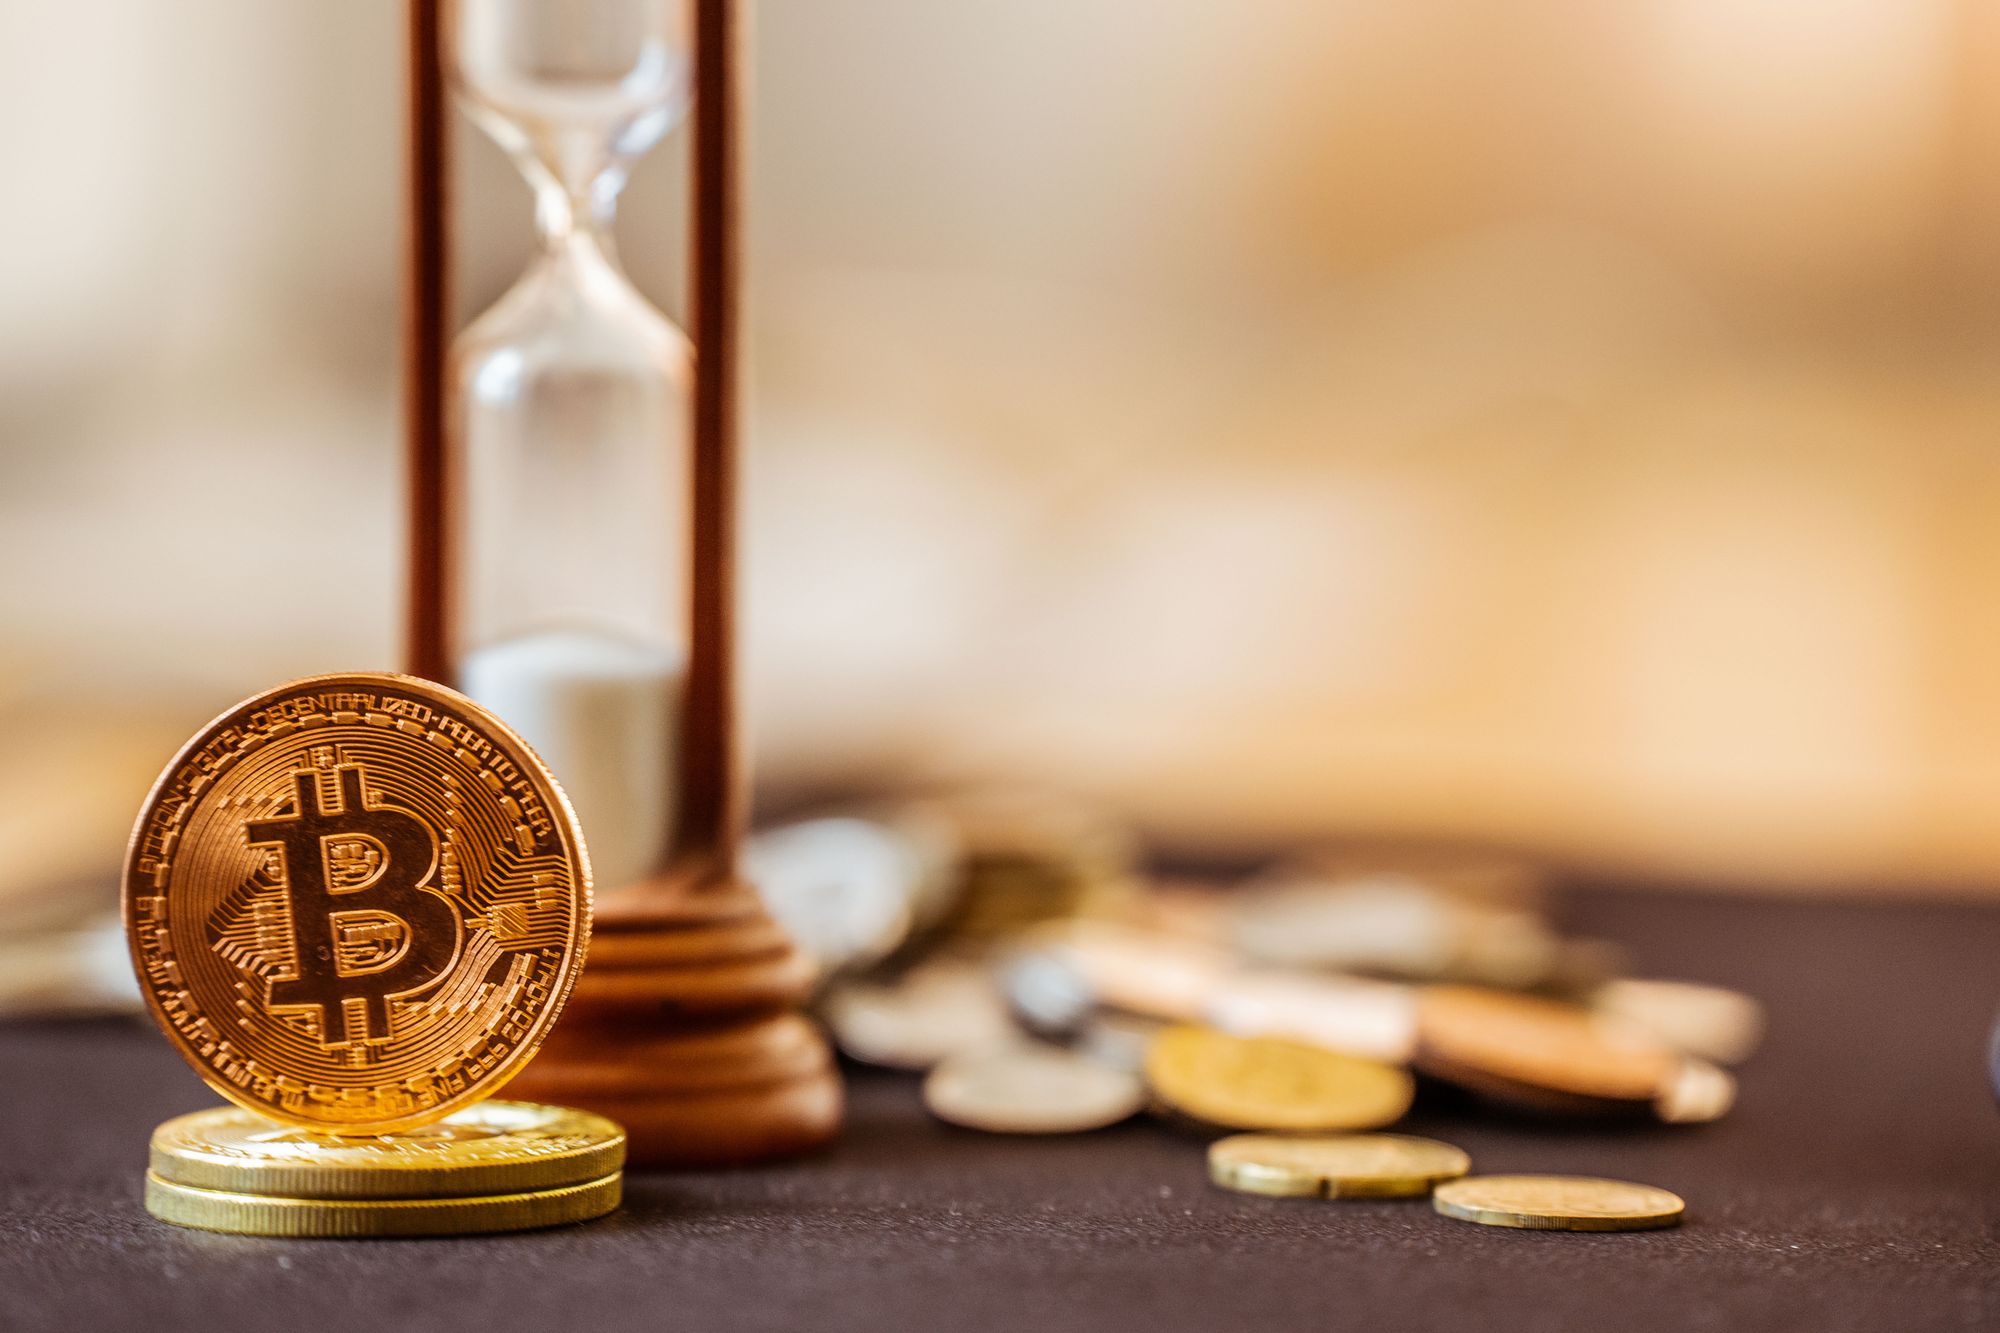 Bitcoin next to an hourglass